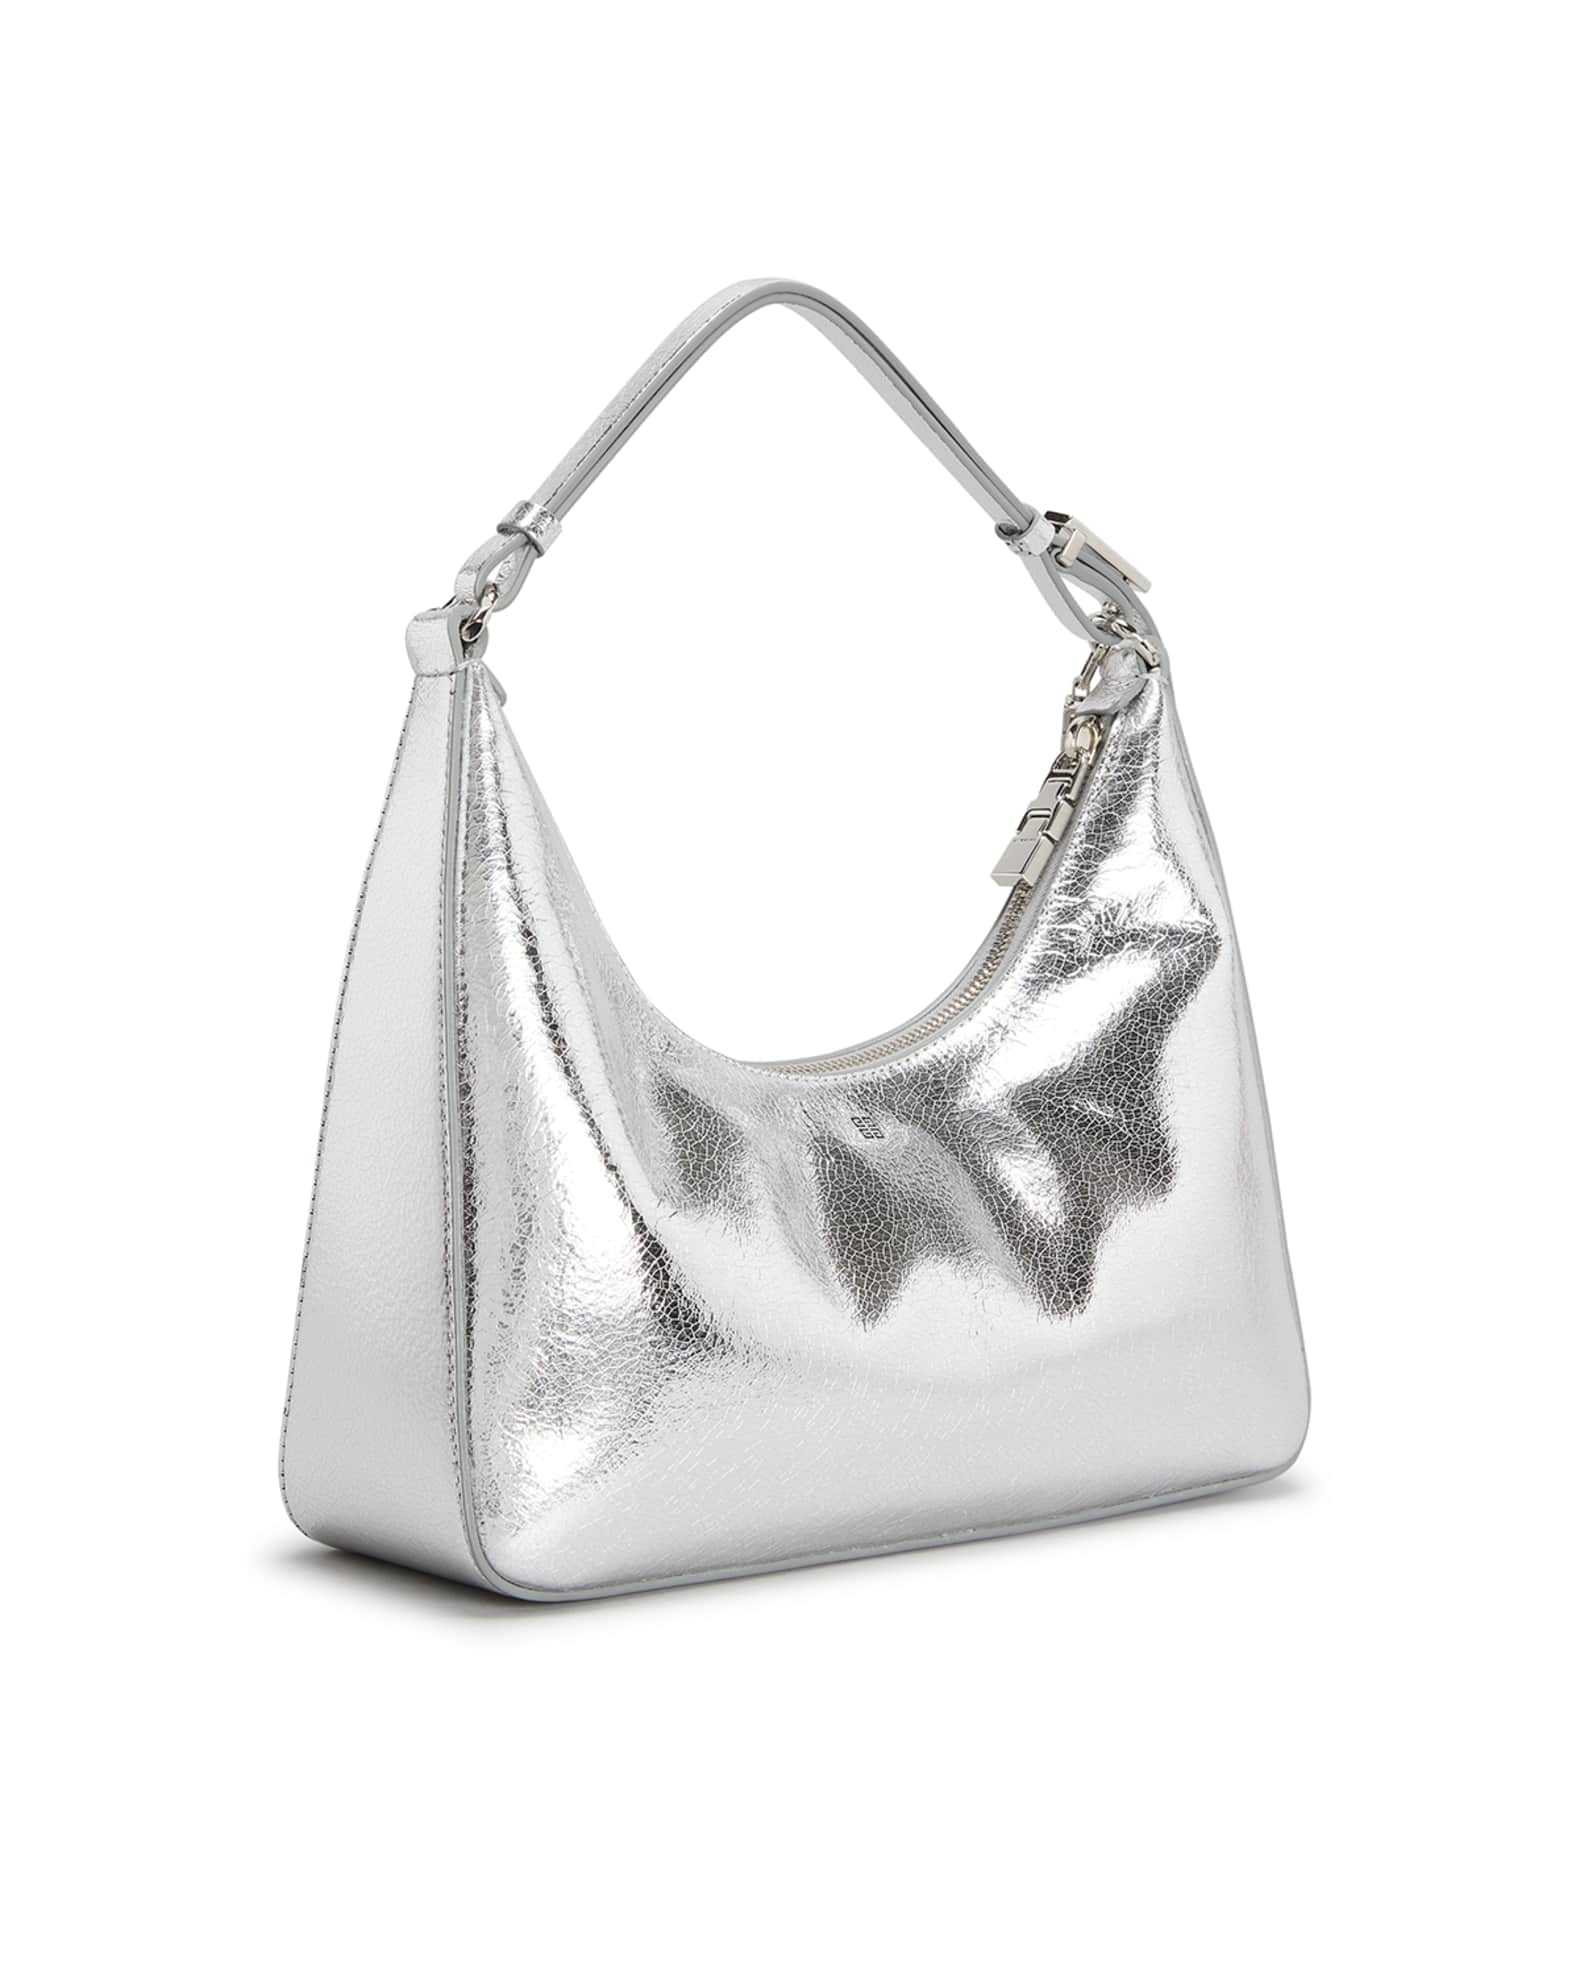 Givenchy Small Moon Cutout Hobo Bag in Metallic Lambskin Leather ...